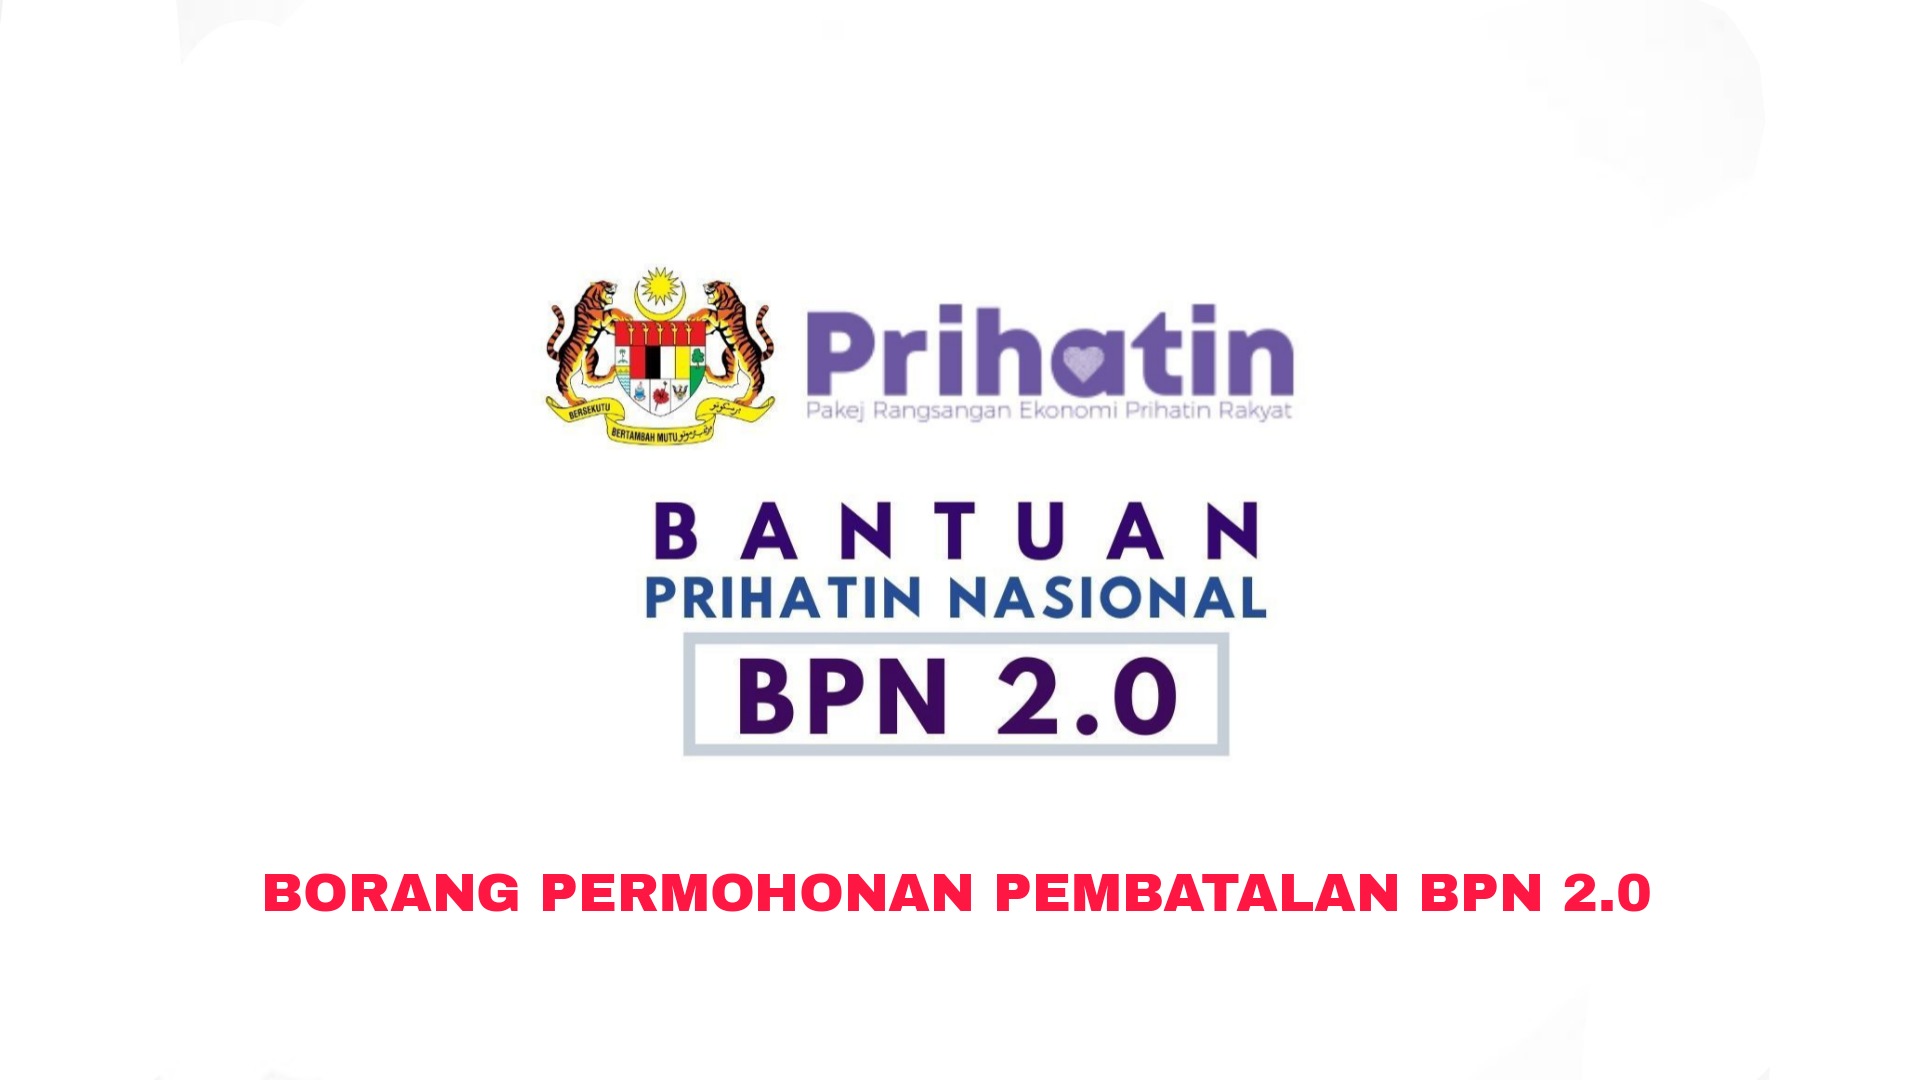 Borang Permohonan Pembatalan BPN 2.0 Online